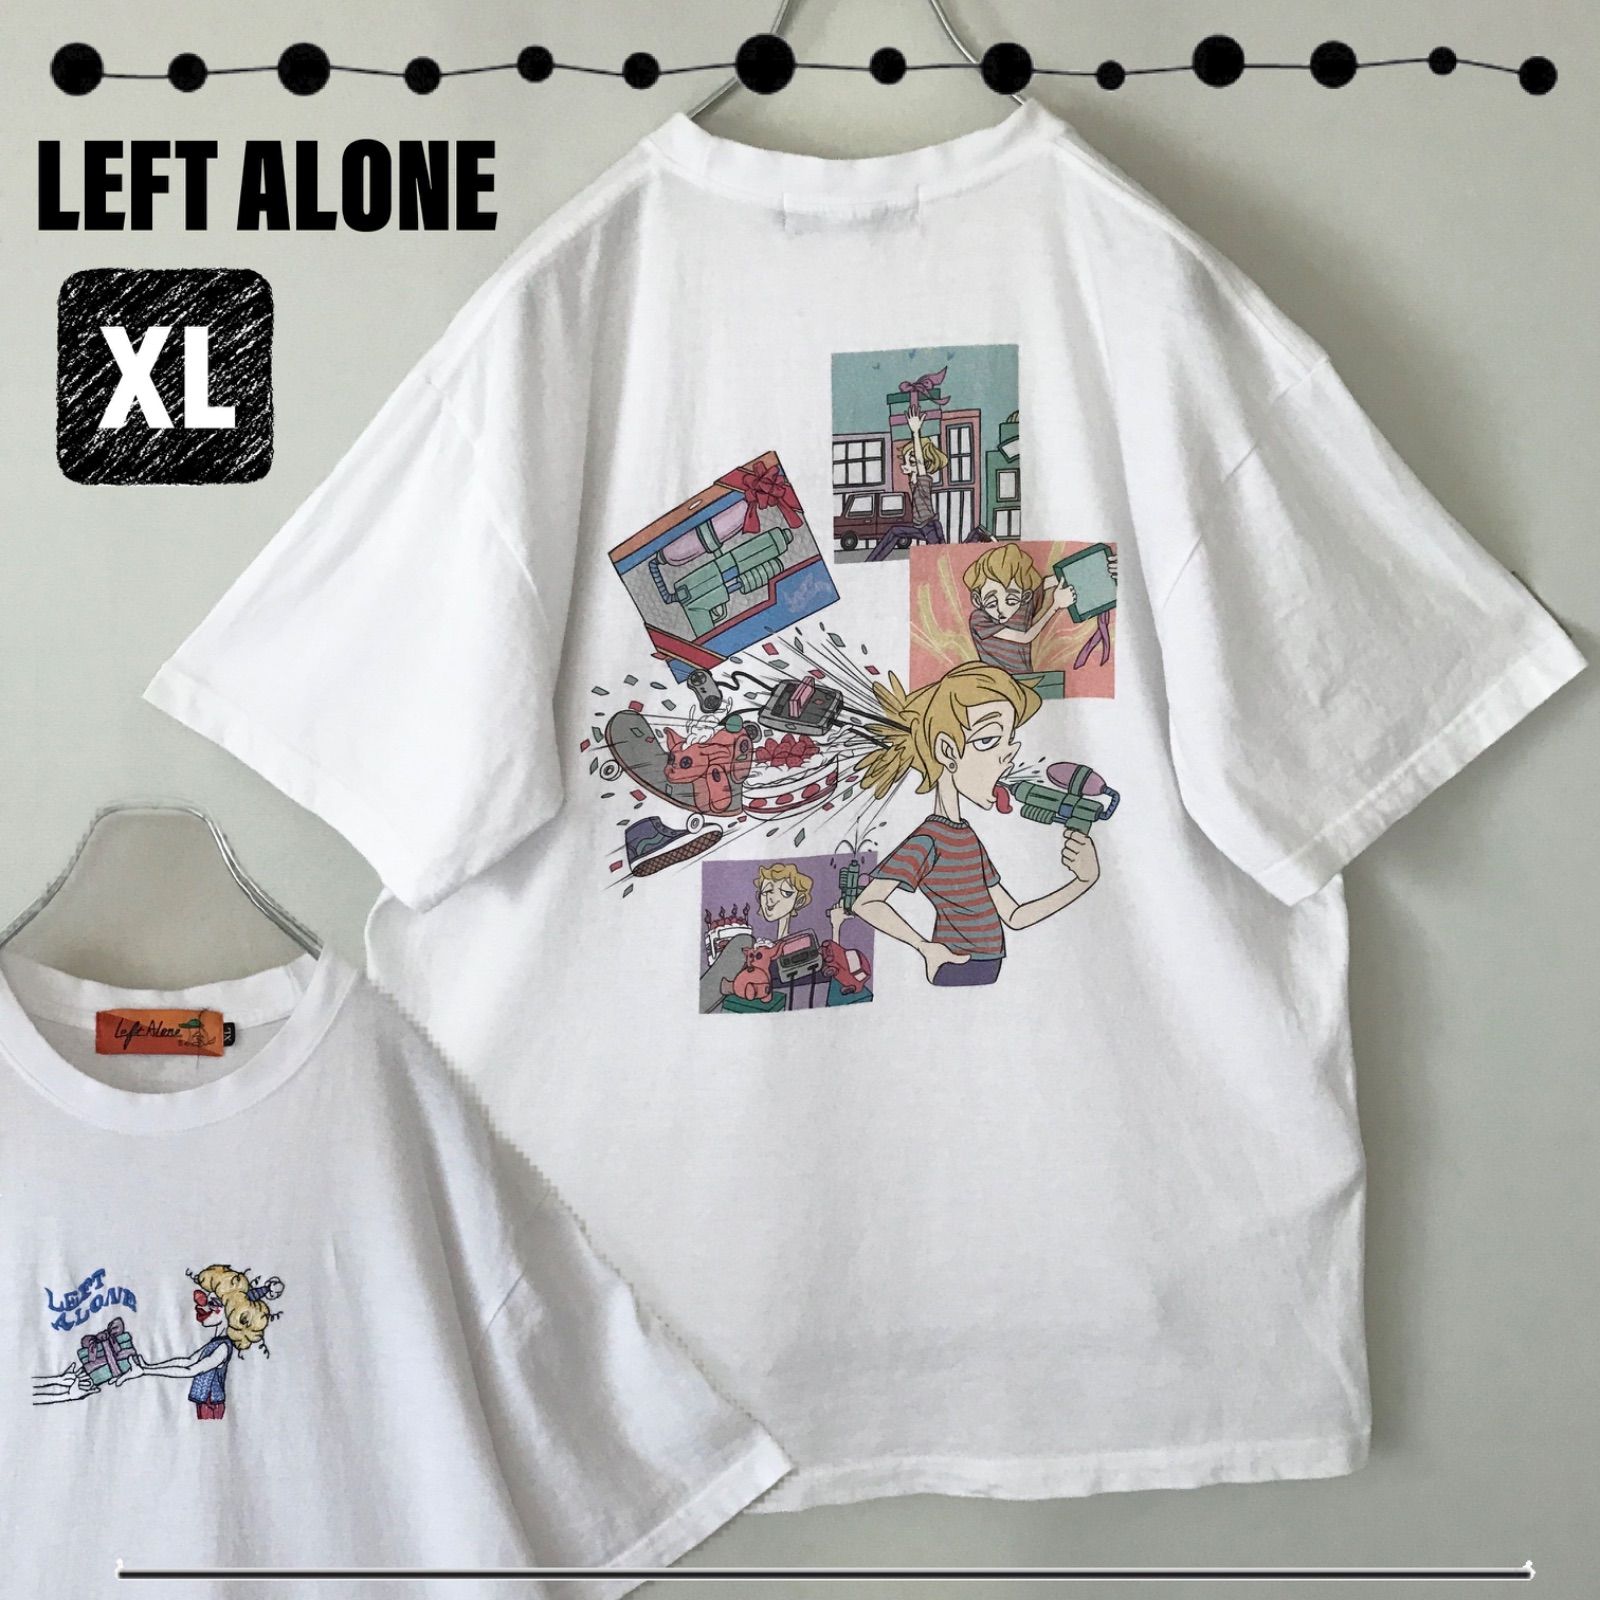 LEFT ALONE Tシャツ 【在庫限り】 - トップス